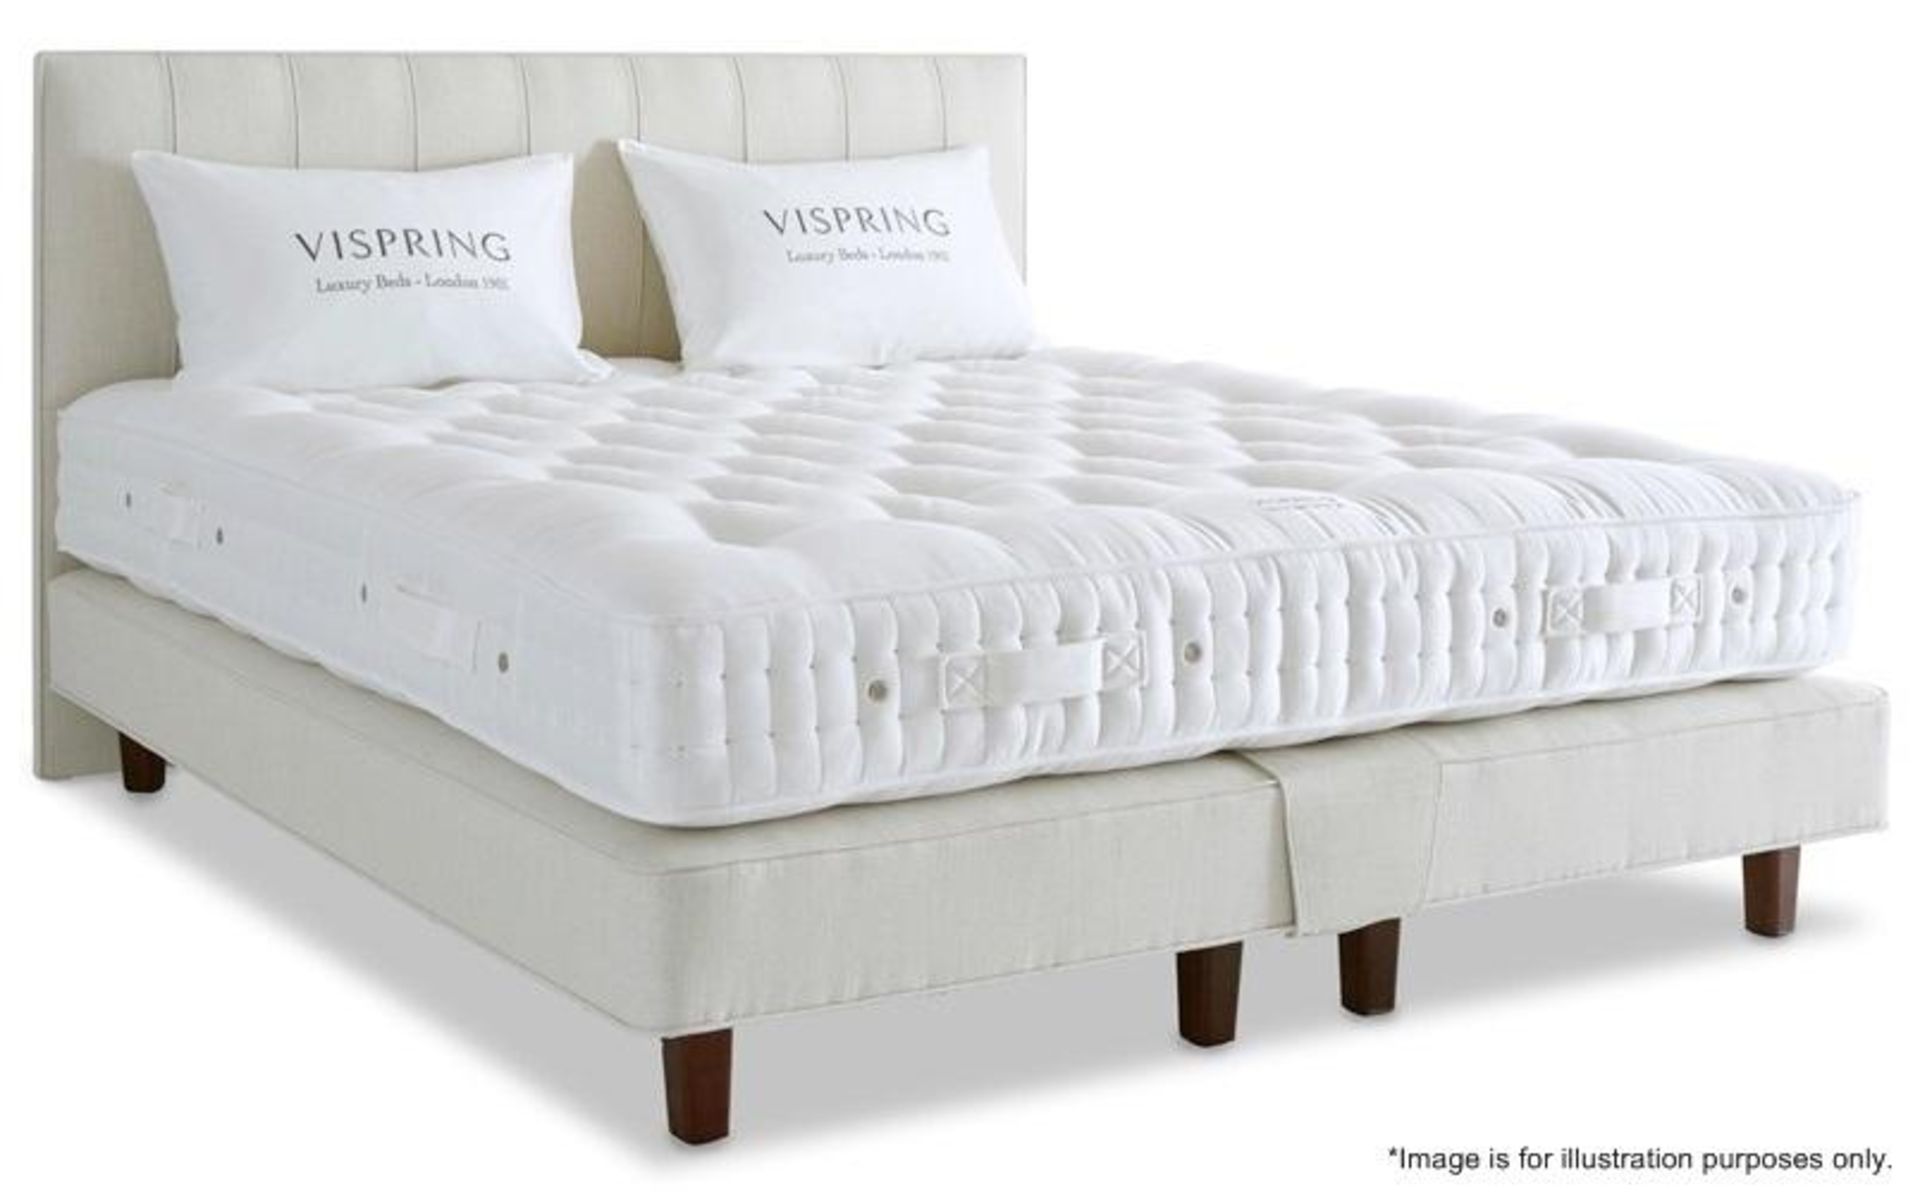 1 x Vispring Herald Superb Kingsize Divan Bed In Cream Leather With Mattress & Headboard - 150X200 -